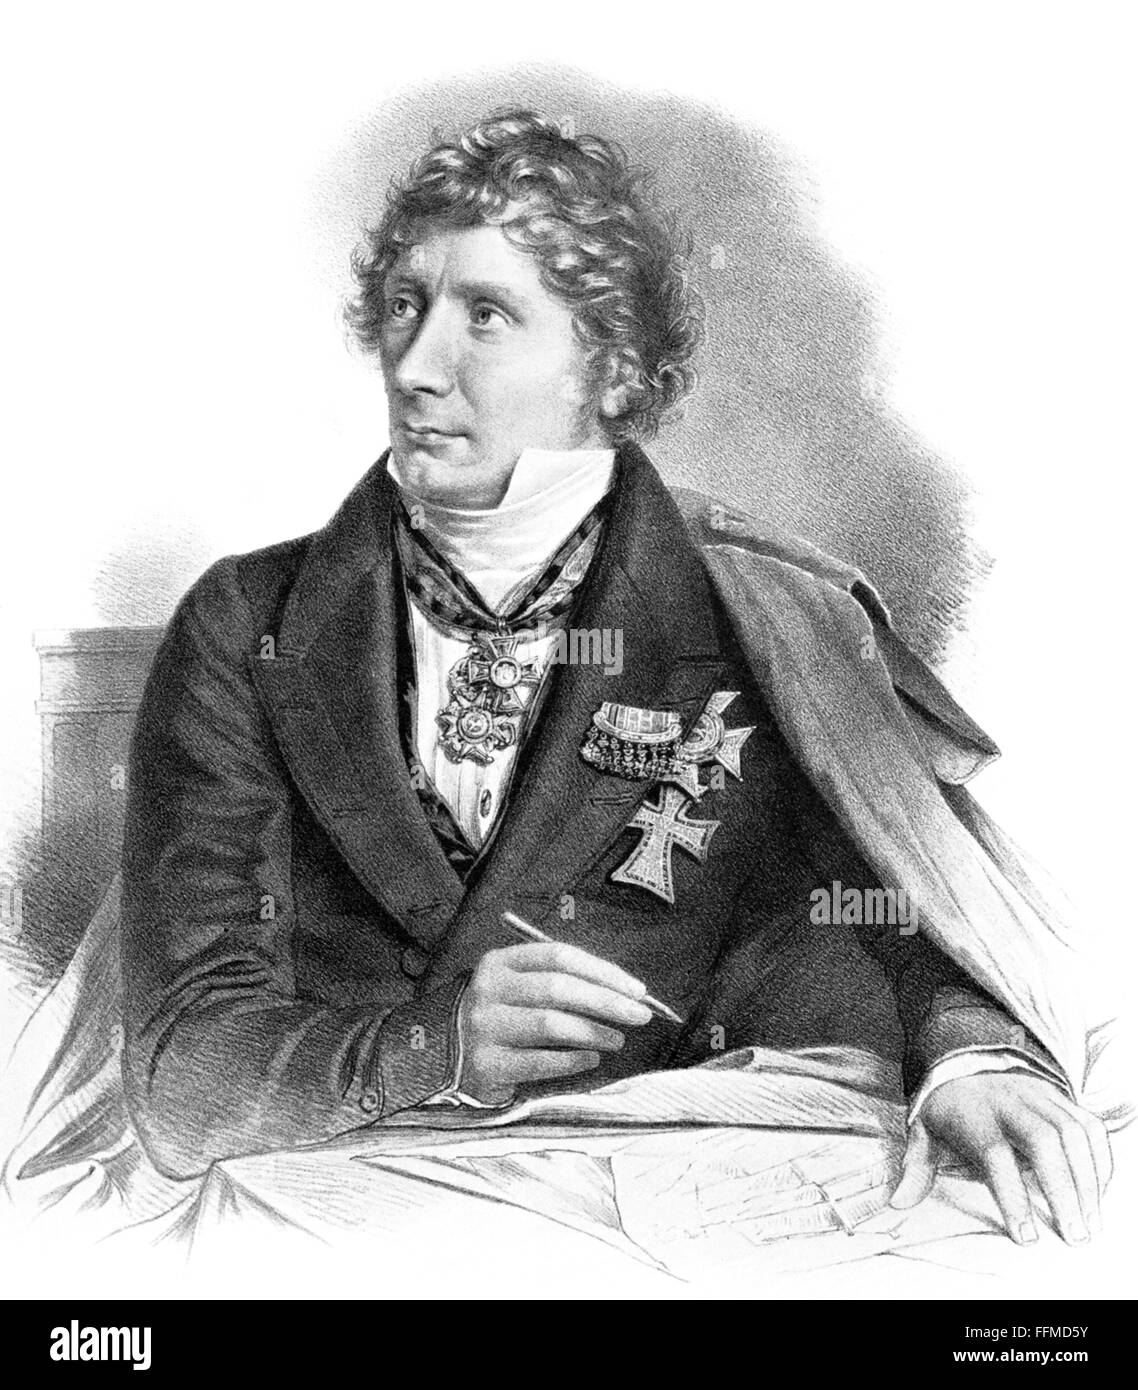 Klenze, Leo von, 29.2.1784 - 27.1.1864, German architect, half length, after lithograph by Ignaz Fertig, 19th century, Stock Photo